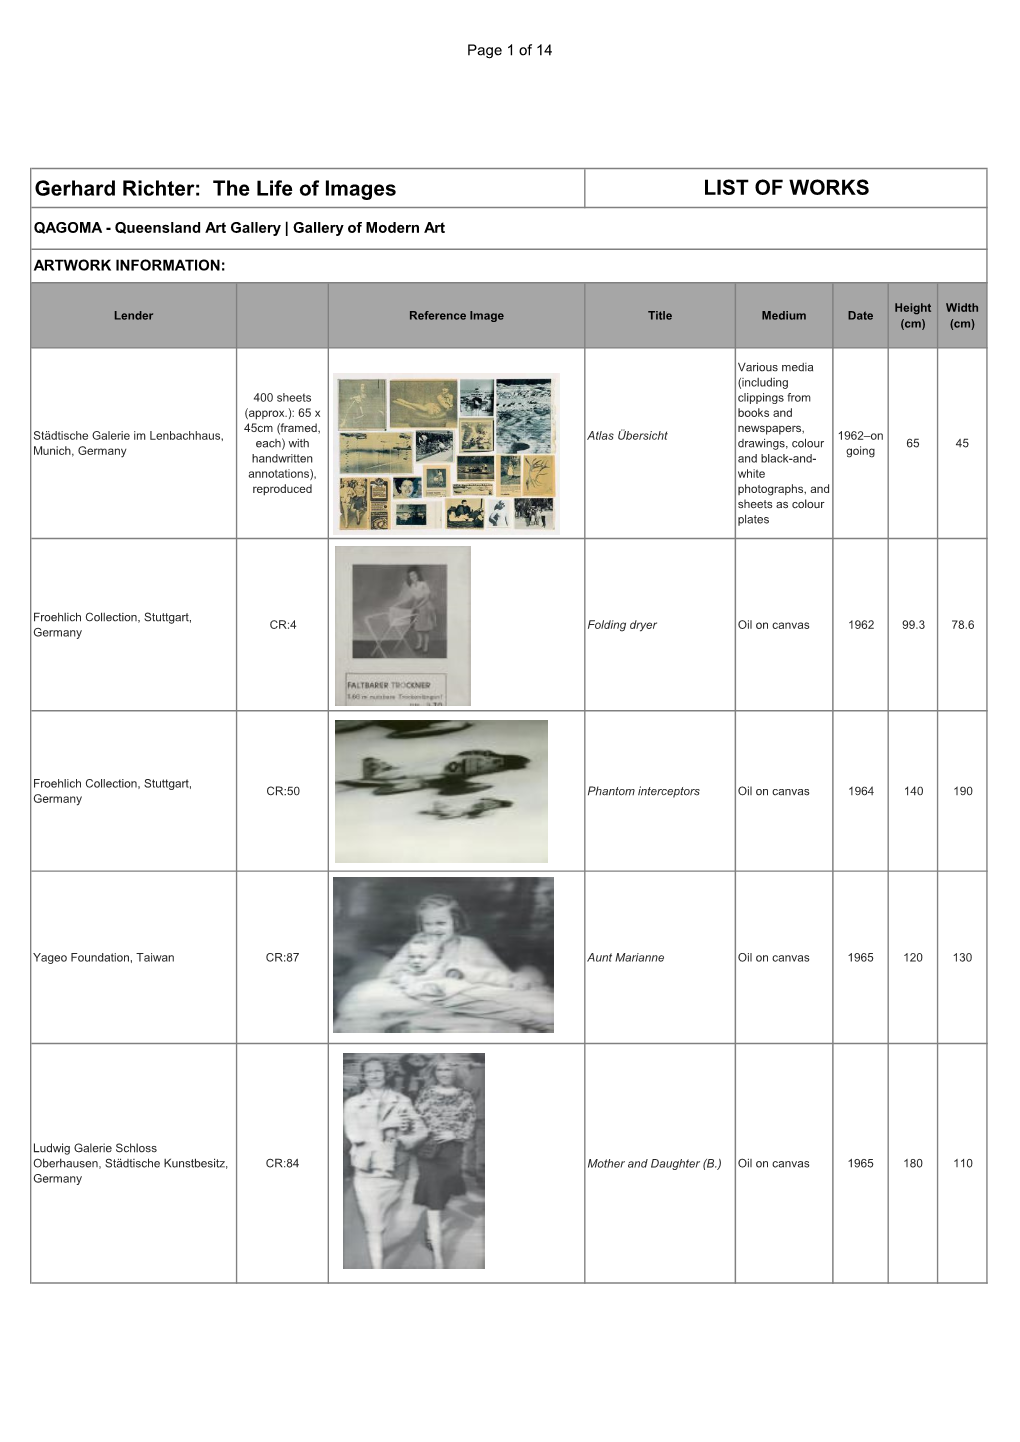 Gerhard Richter: the Life of Images LIST of WORKS